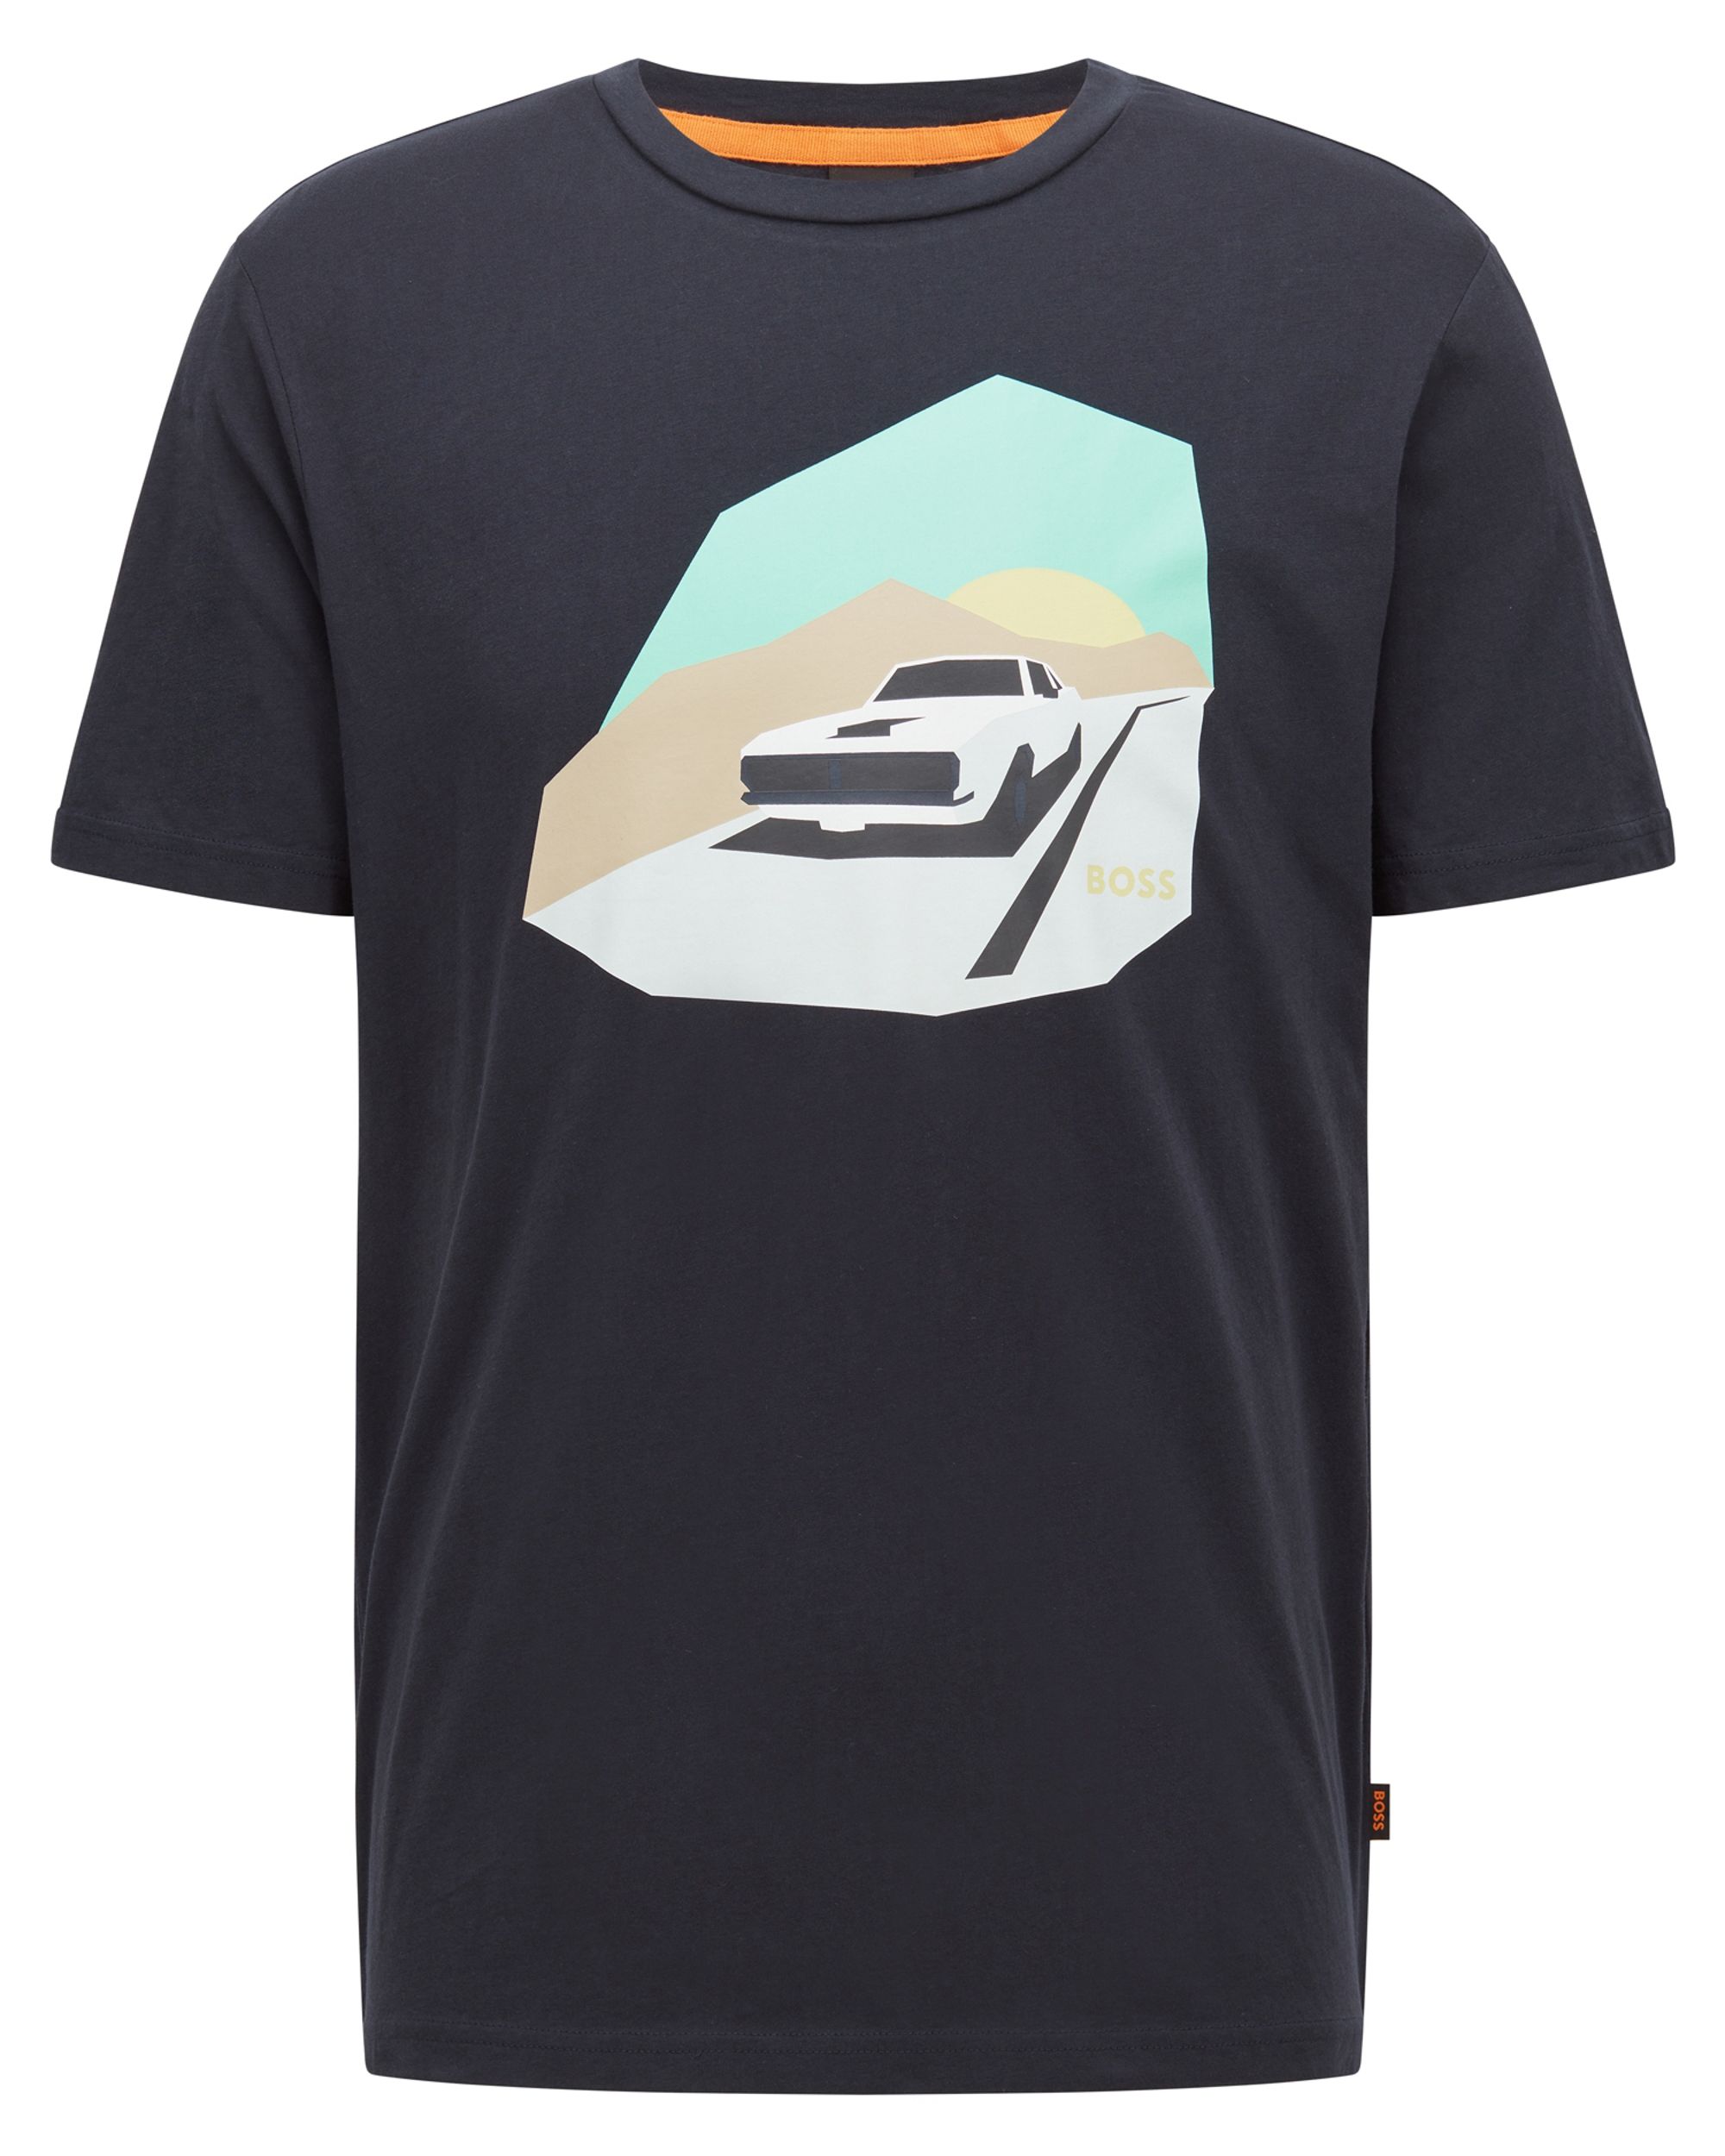 Hugo Boss Casual Tee Car T-shirt KM Donker blauw 080858-001-L